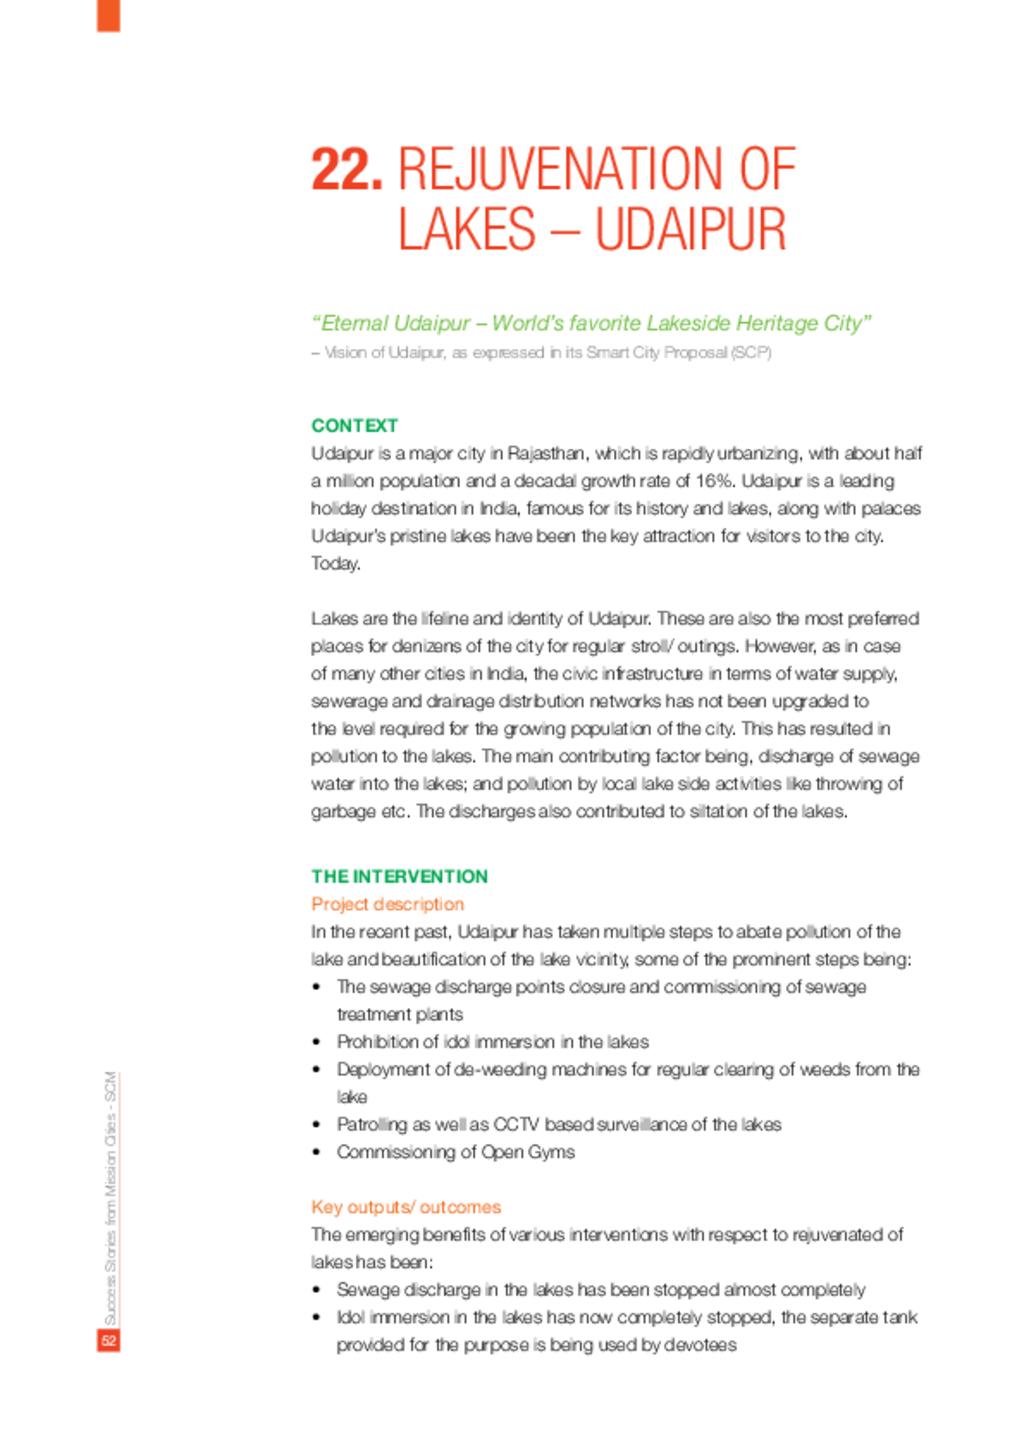 Rejuvenation Of Lakes – Udaipur